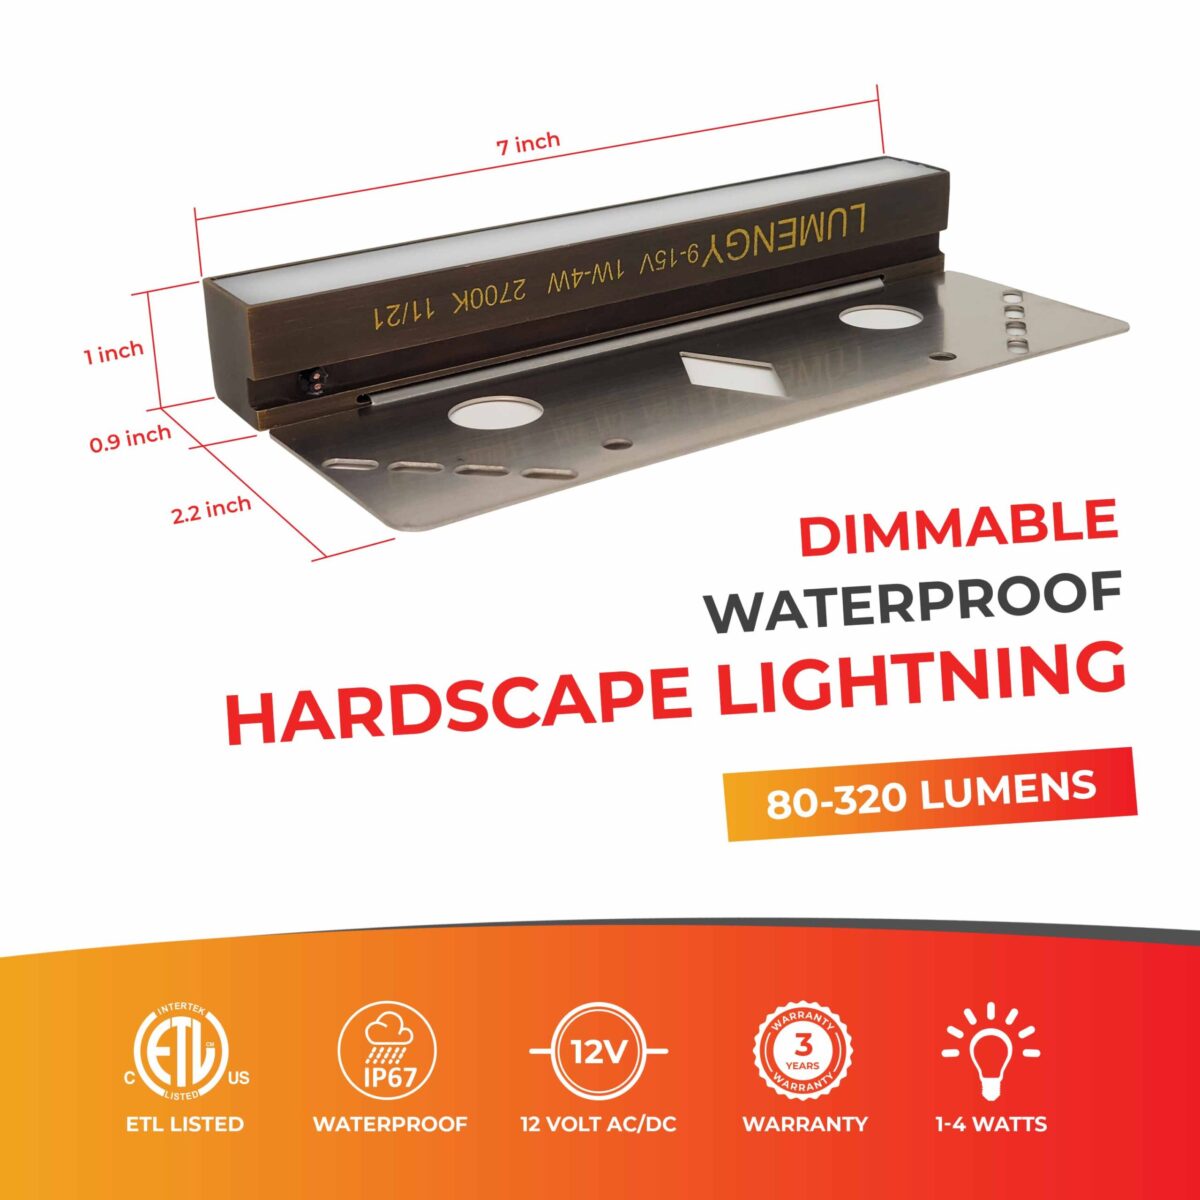 Waterproof Hardscape Light - Compact Design